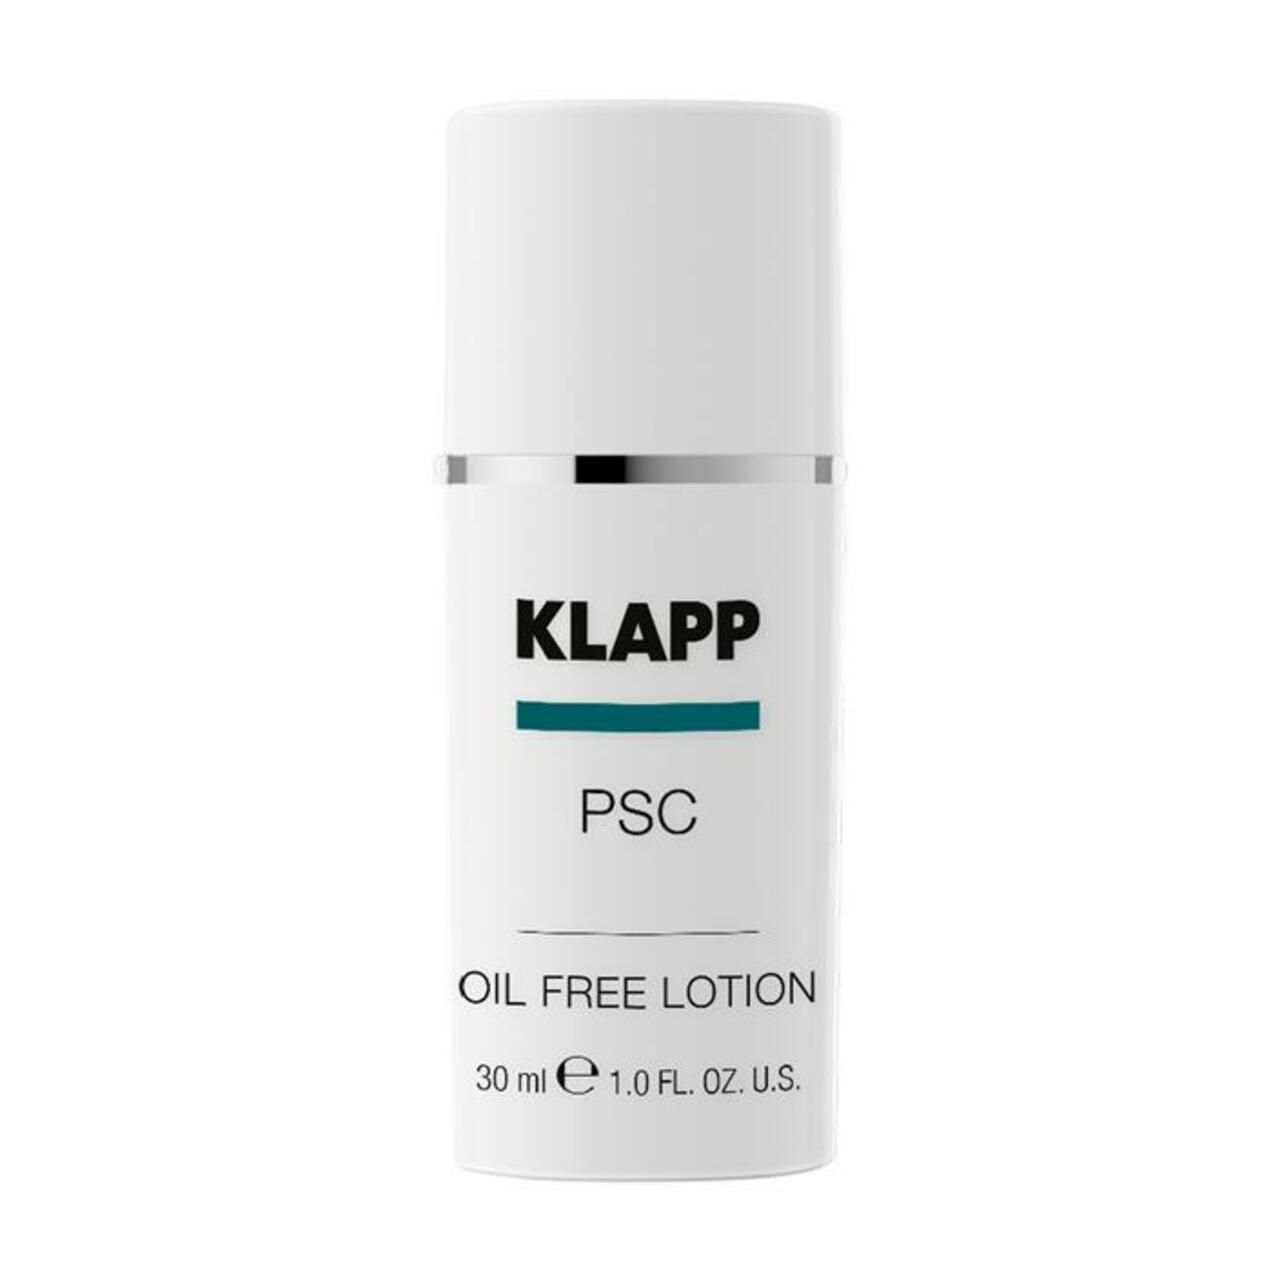 Klapp, PSC Problem Skin Oil Free Lotion